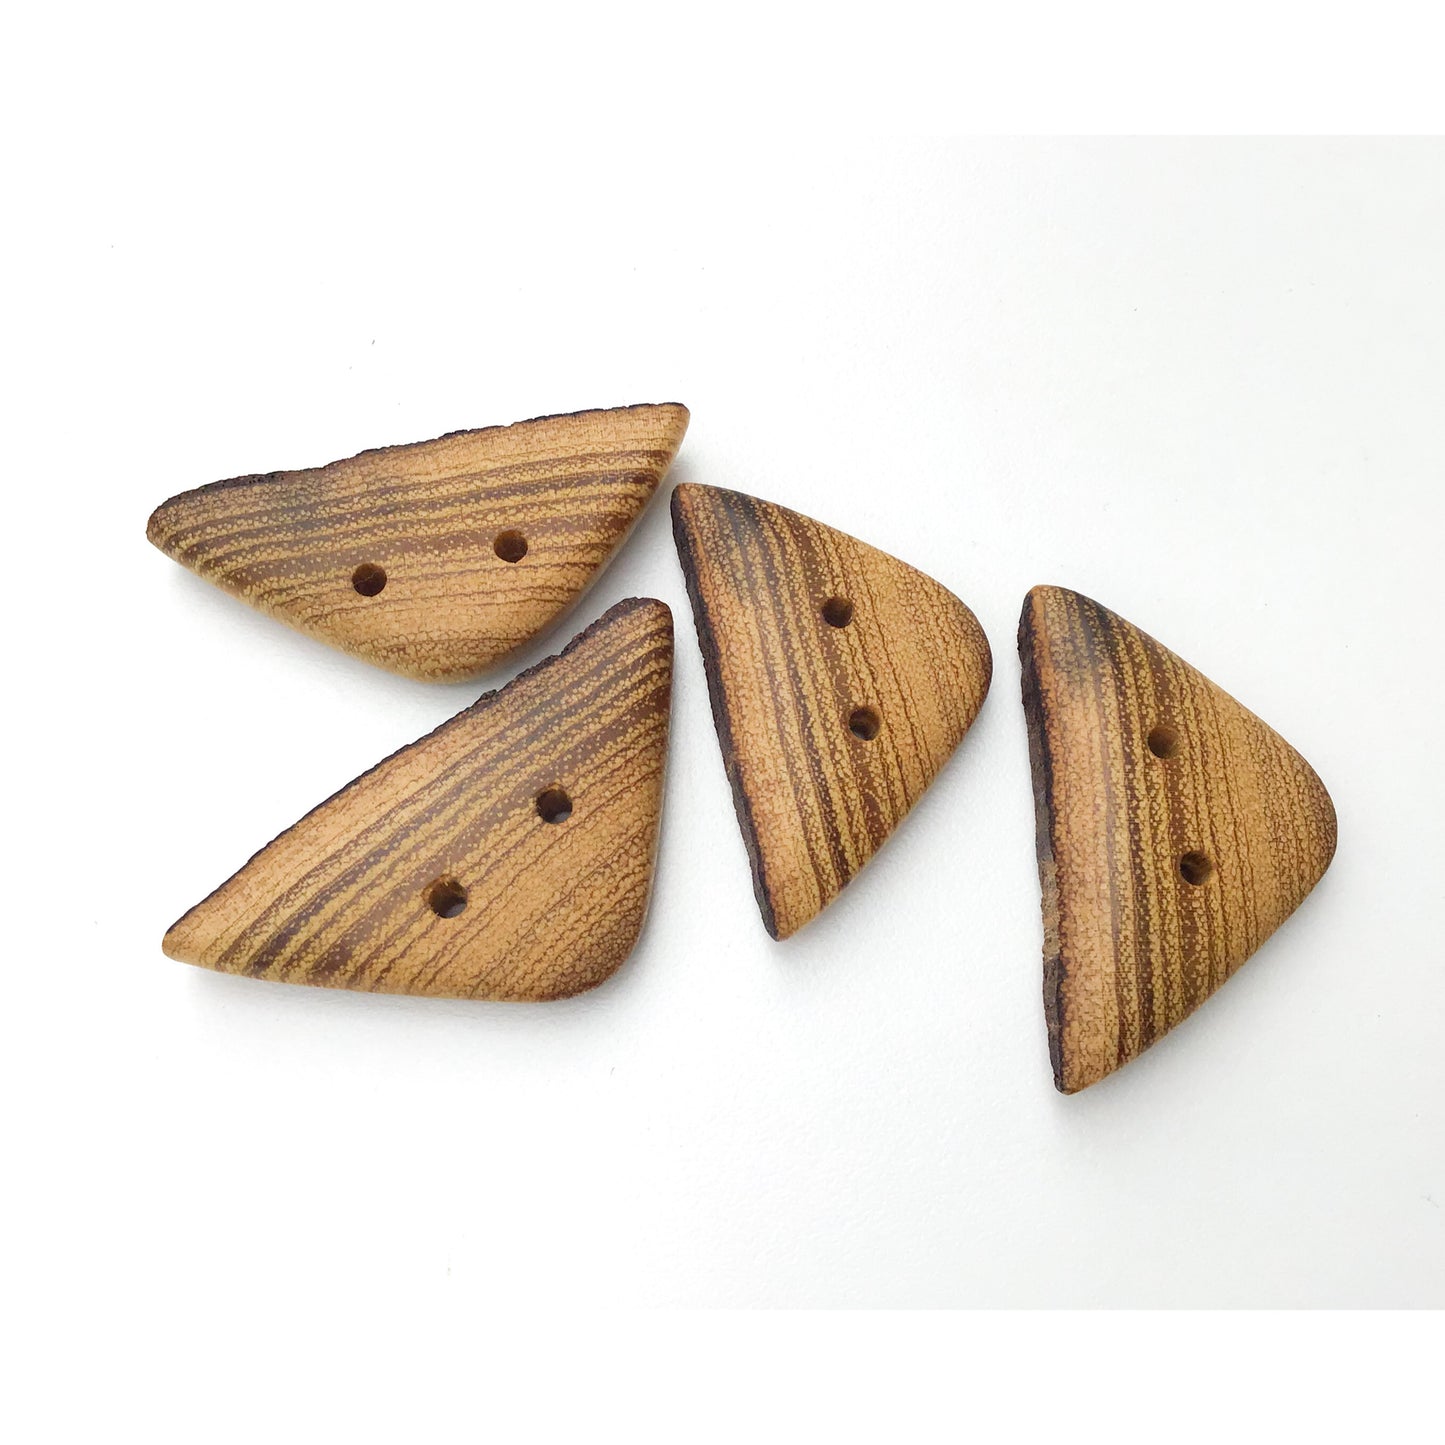 Triangular Black Locust Wood Buttons - Live Edge Wood Buttons